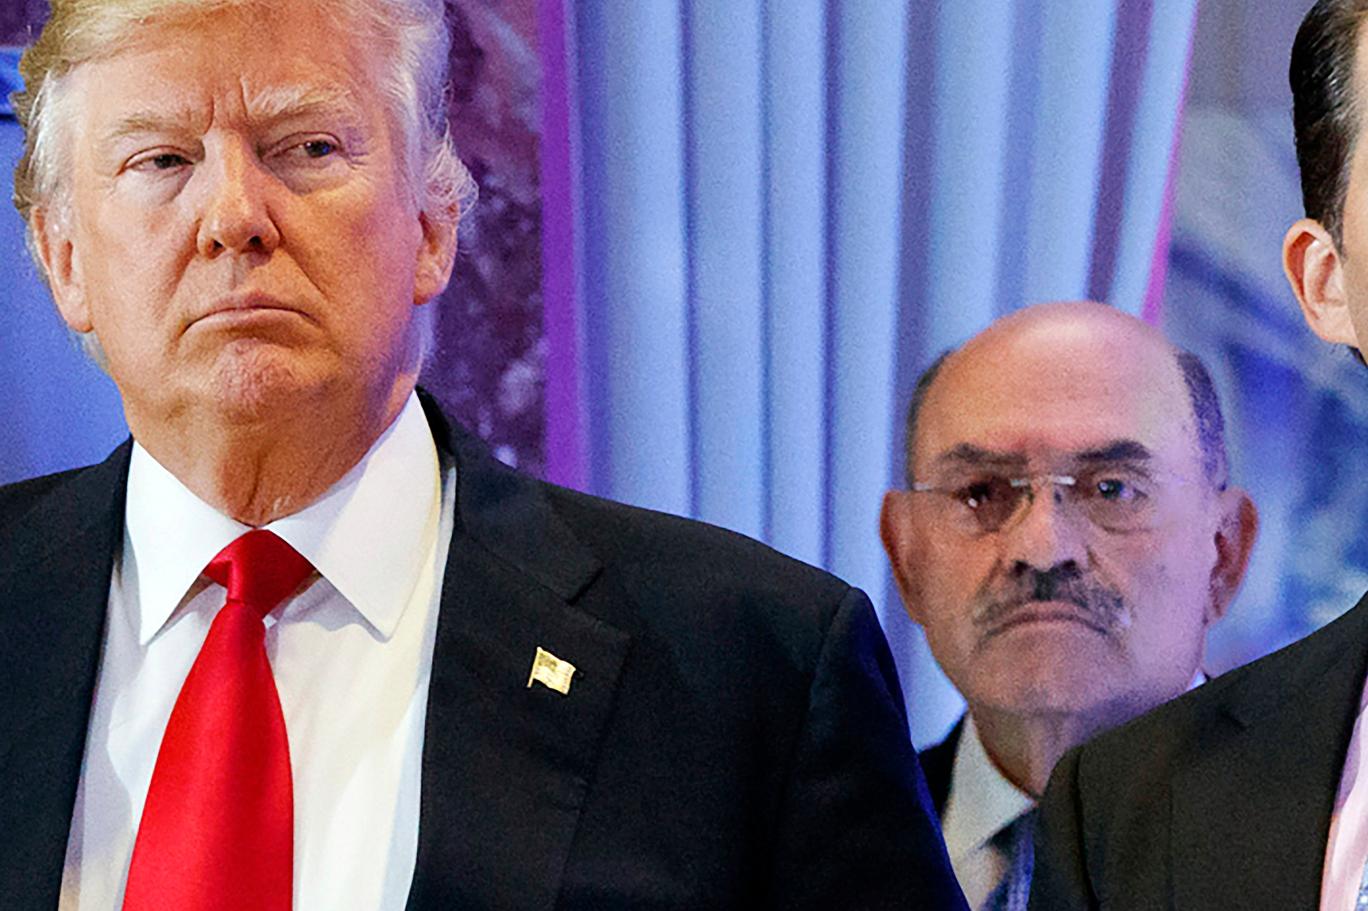 Allen Weisselberg (right) next to Donald Trump in 2017 (AP)